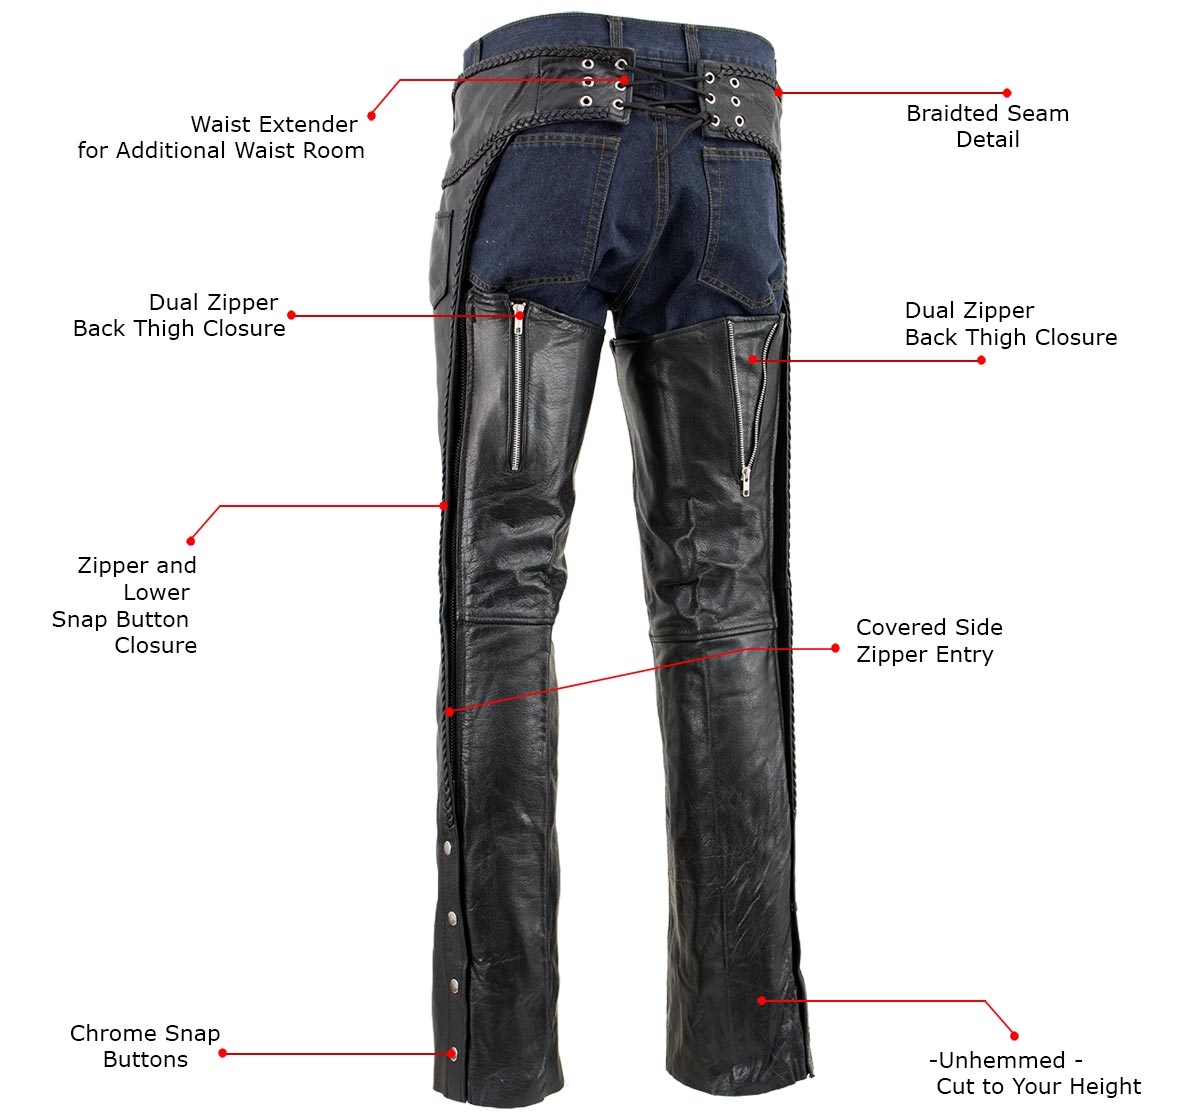 Xelement B7555 Men's Black Classic 'Braided' Elastic Fit Leather Chaps